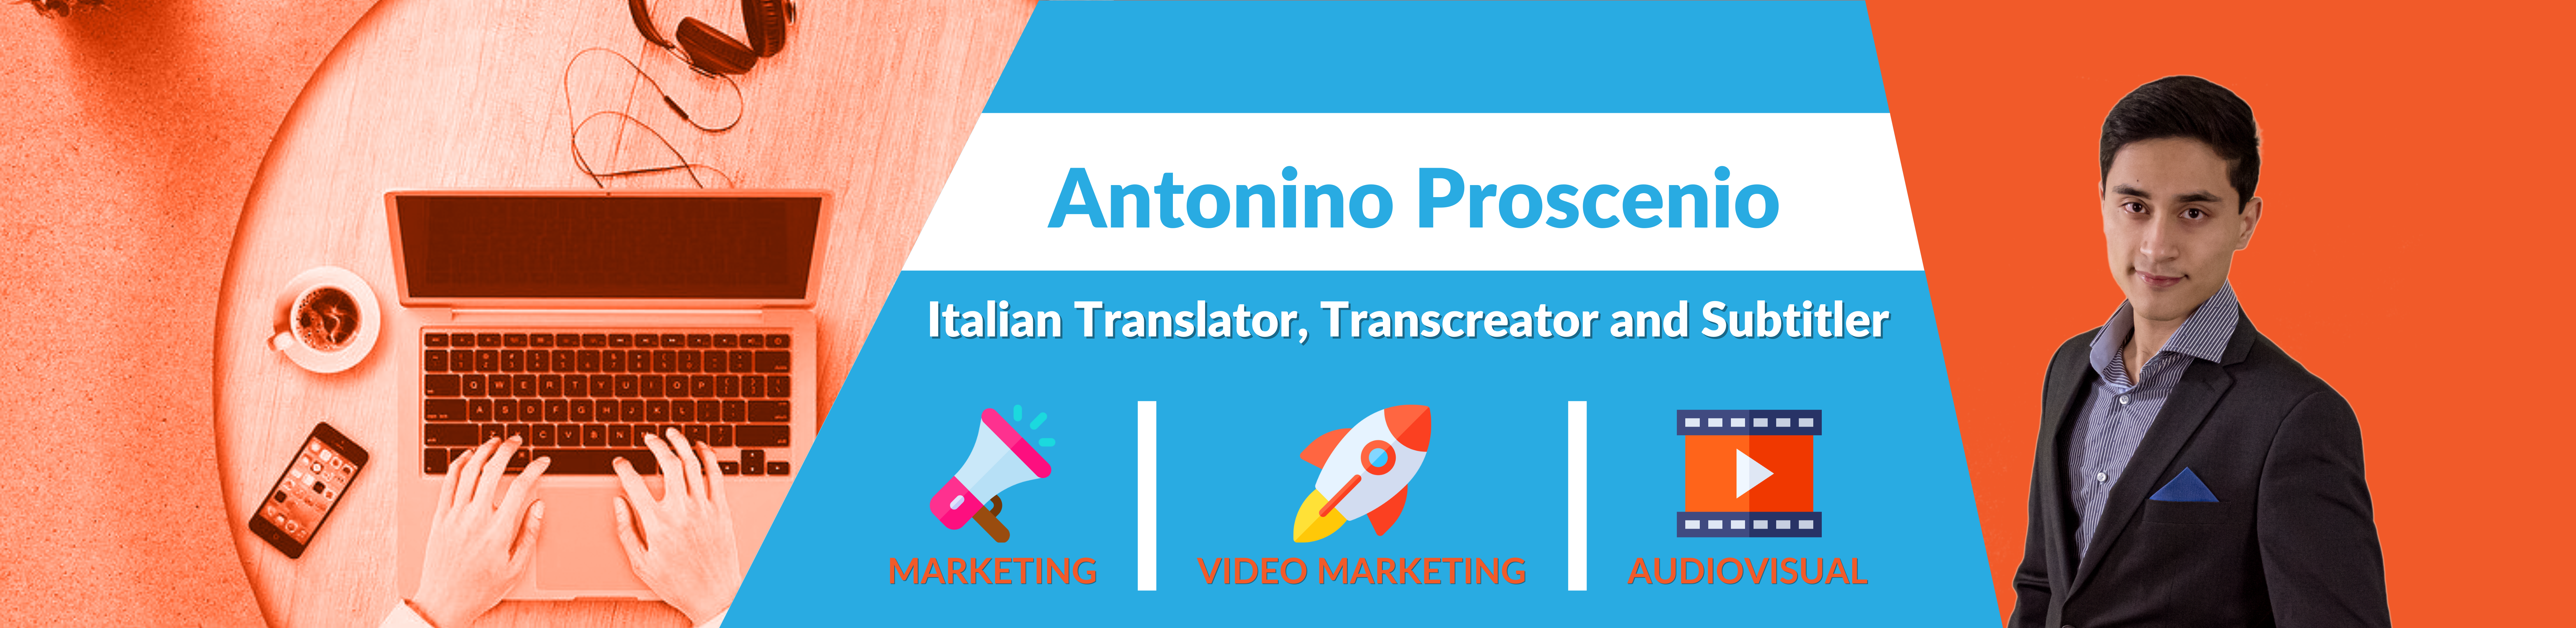 Antonino Proscenio - Italian Translator, Transcreator, and Subtitler